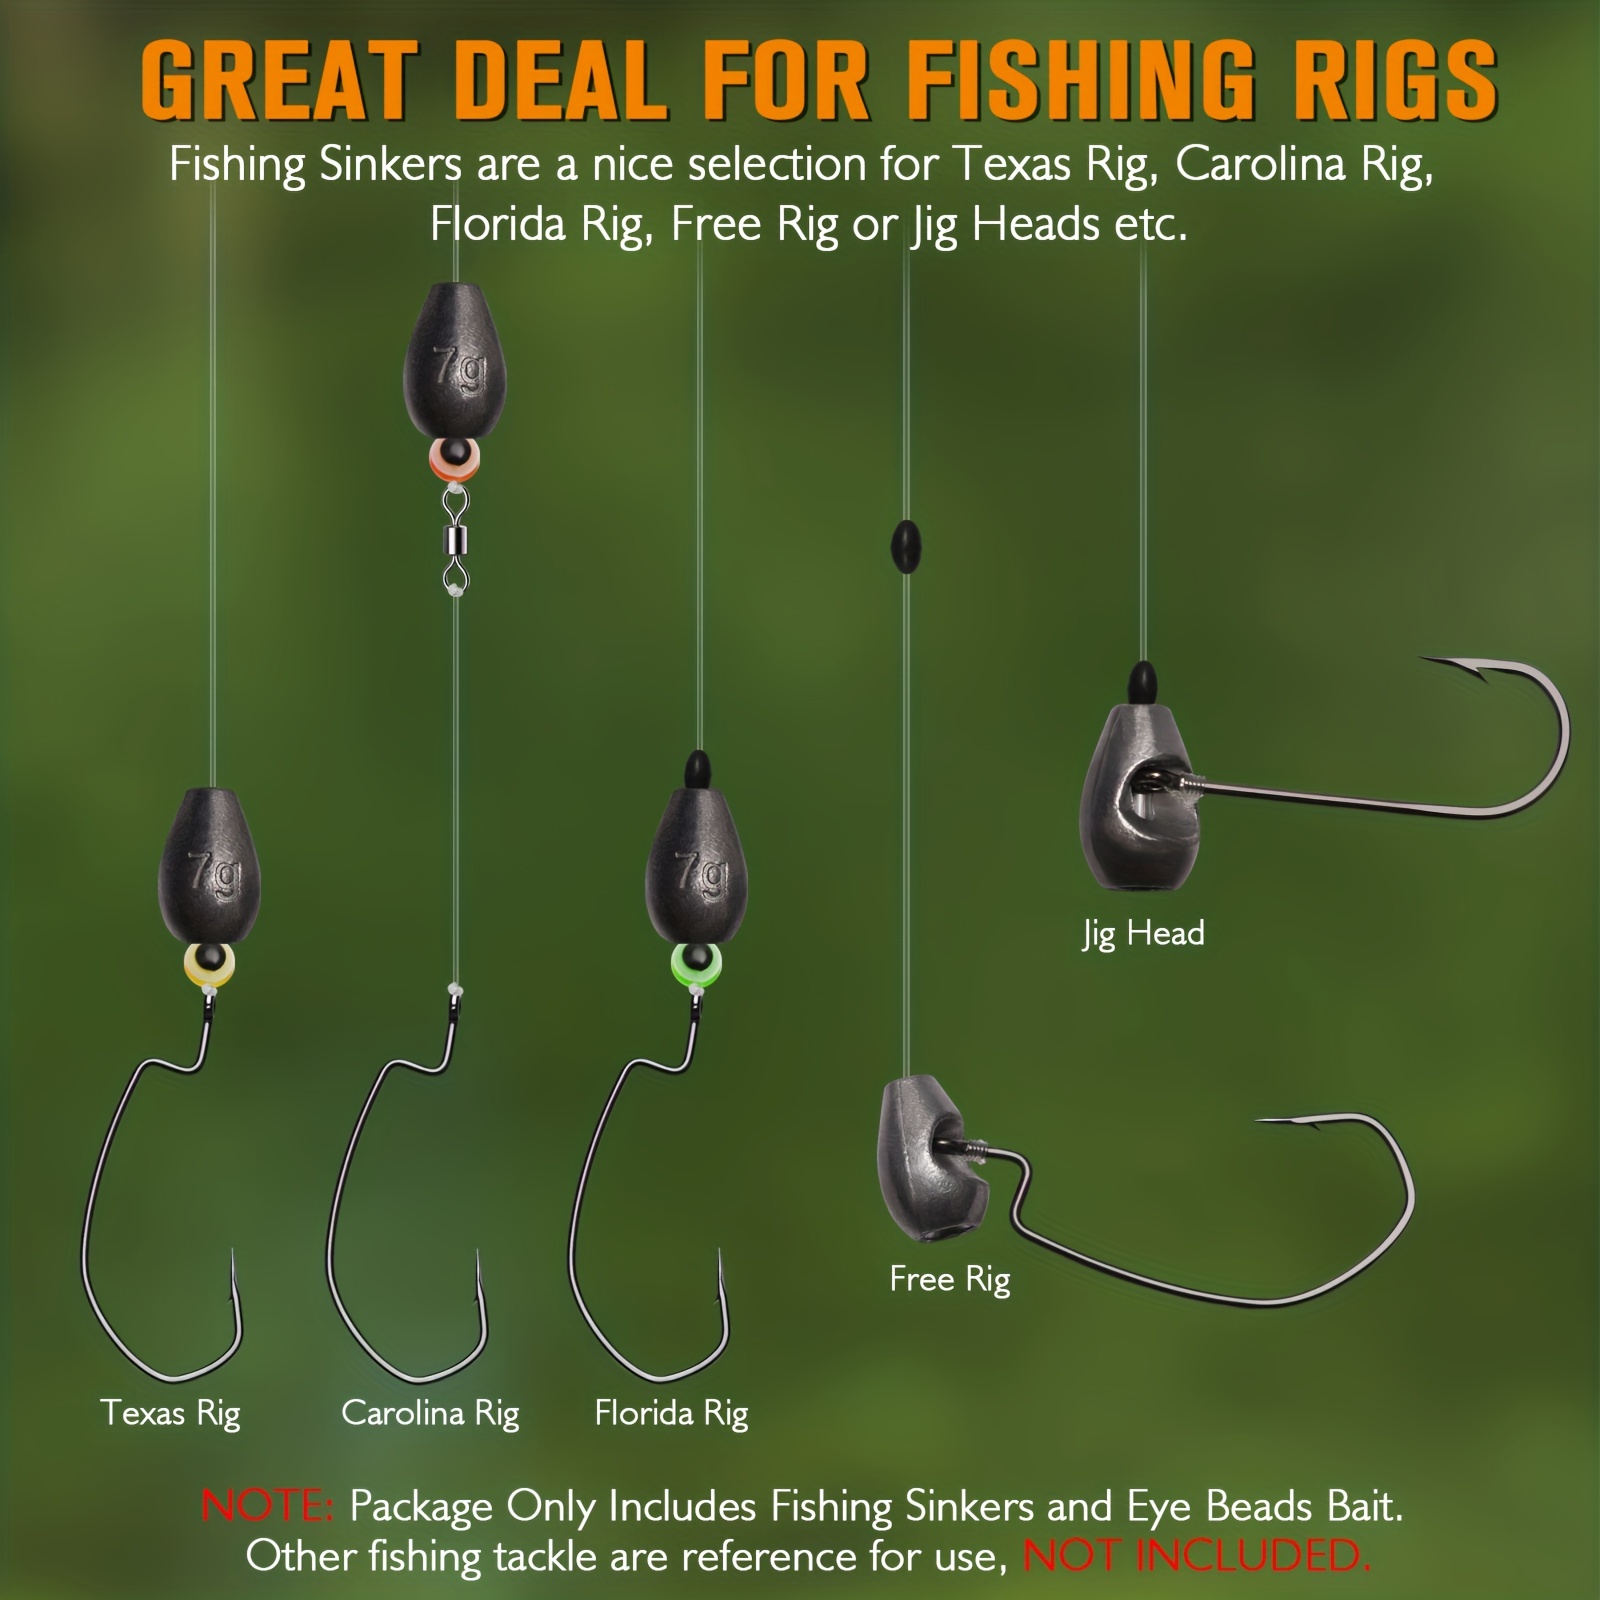 Dovesun 8 Sizes Swing Jig Heads Texas Rig Hooks Fishing - Temu New Zealand